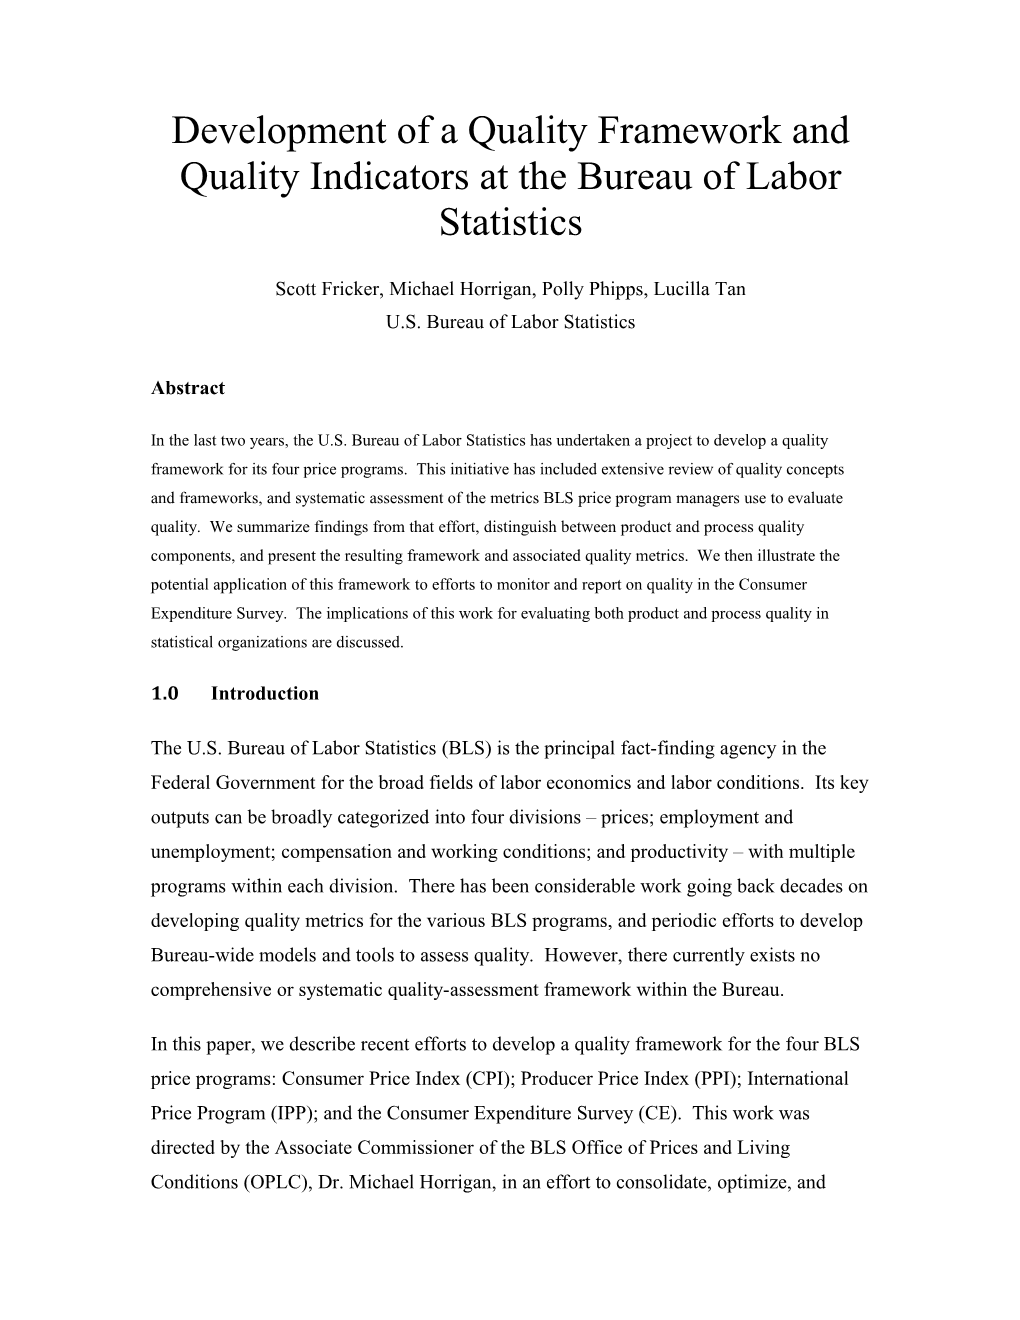 Development of a Quality Framework and Quality Indicators at the Bureau of Labor Statistics